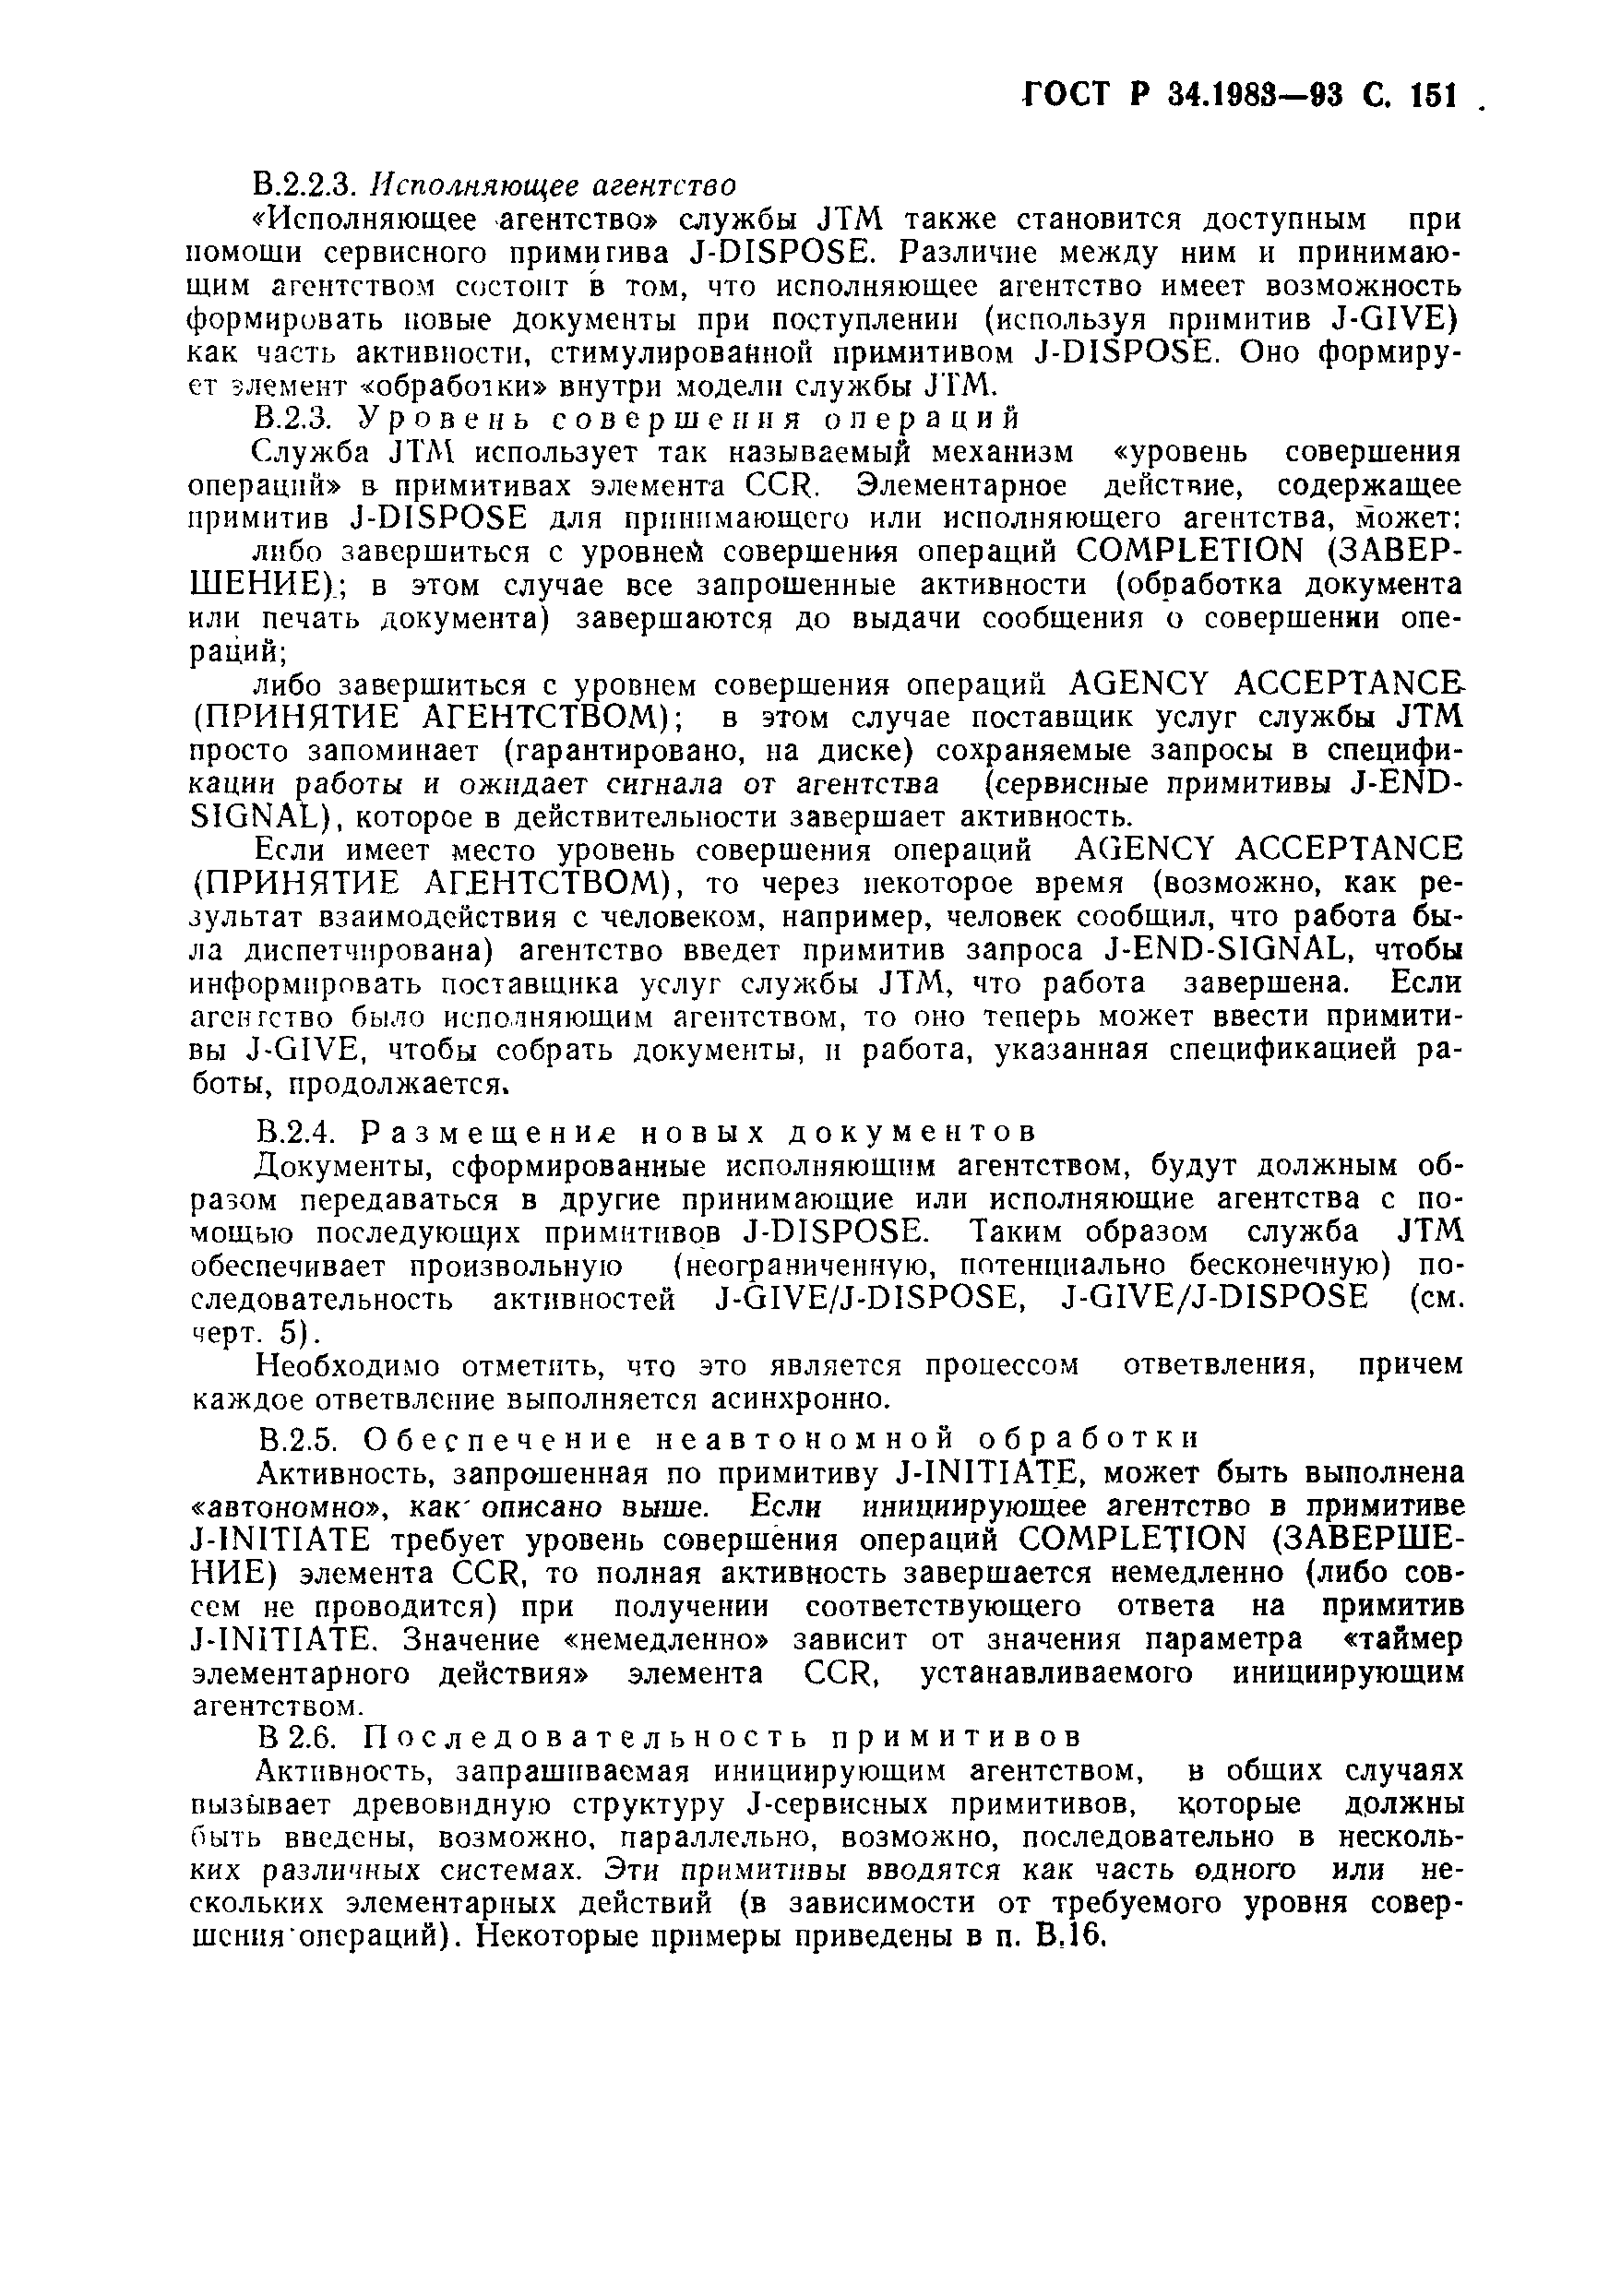 ГОСТ Р 34.1983-93. Страница 152